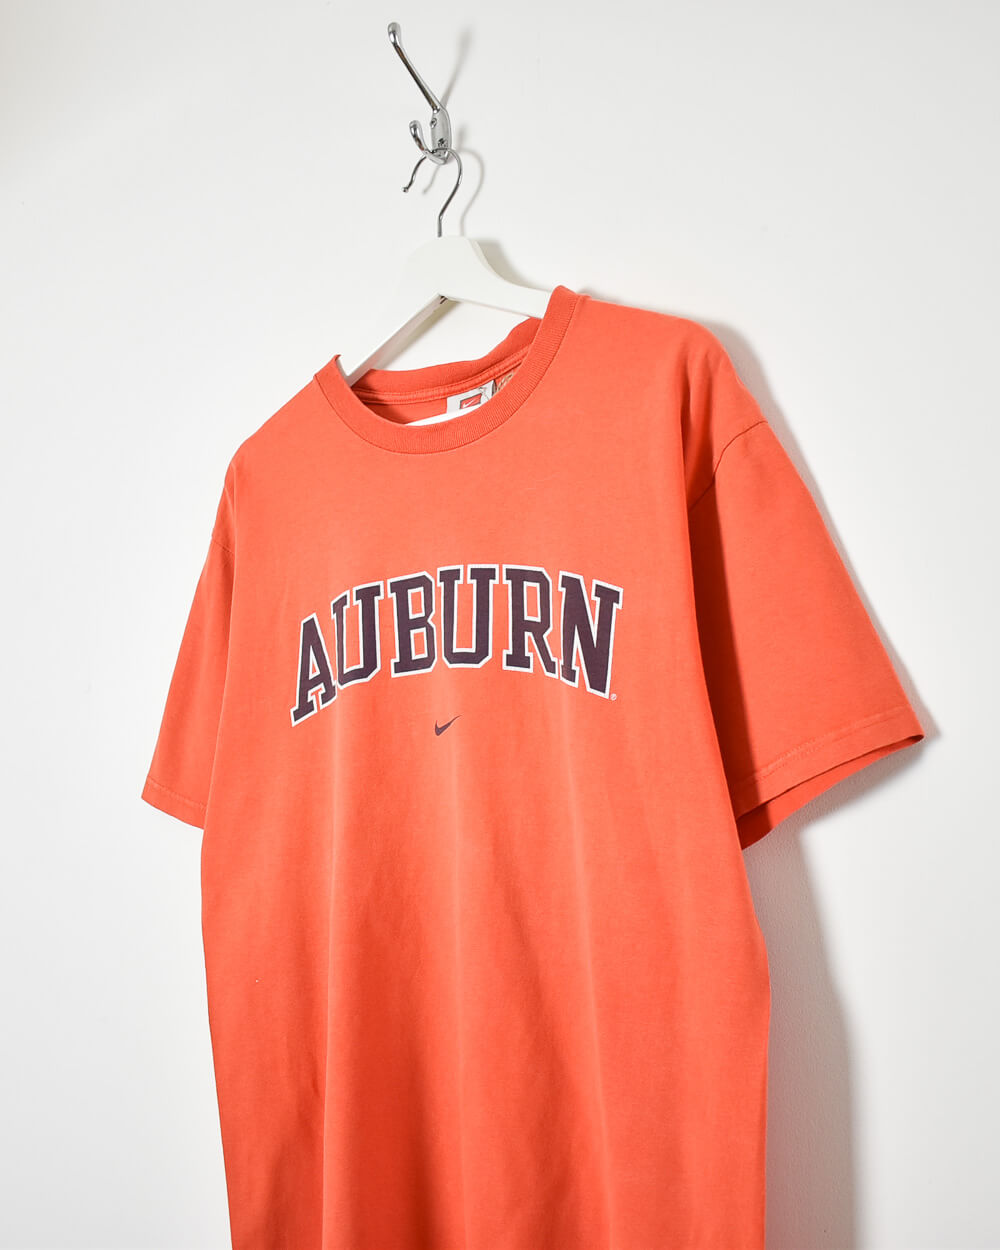 Red Nike Team Auburn T-Shirt - Medium